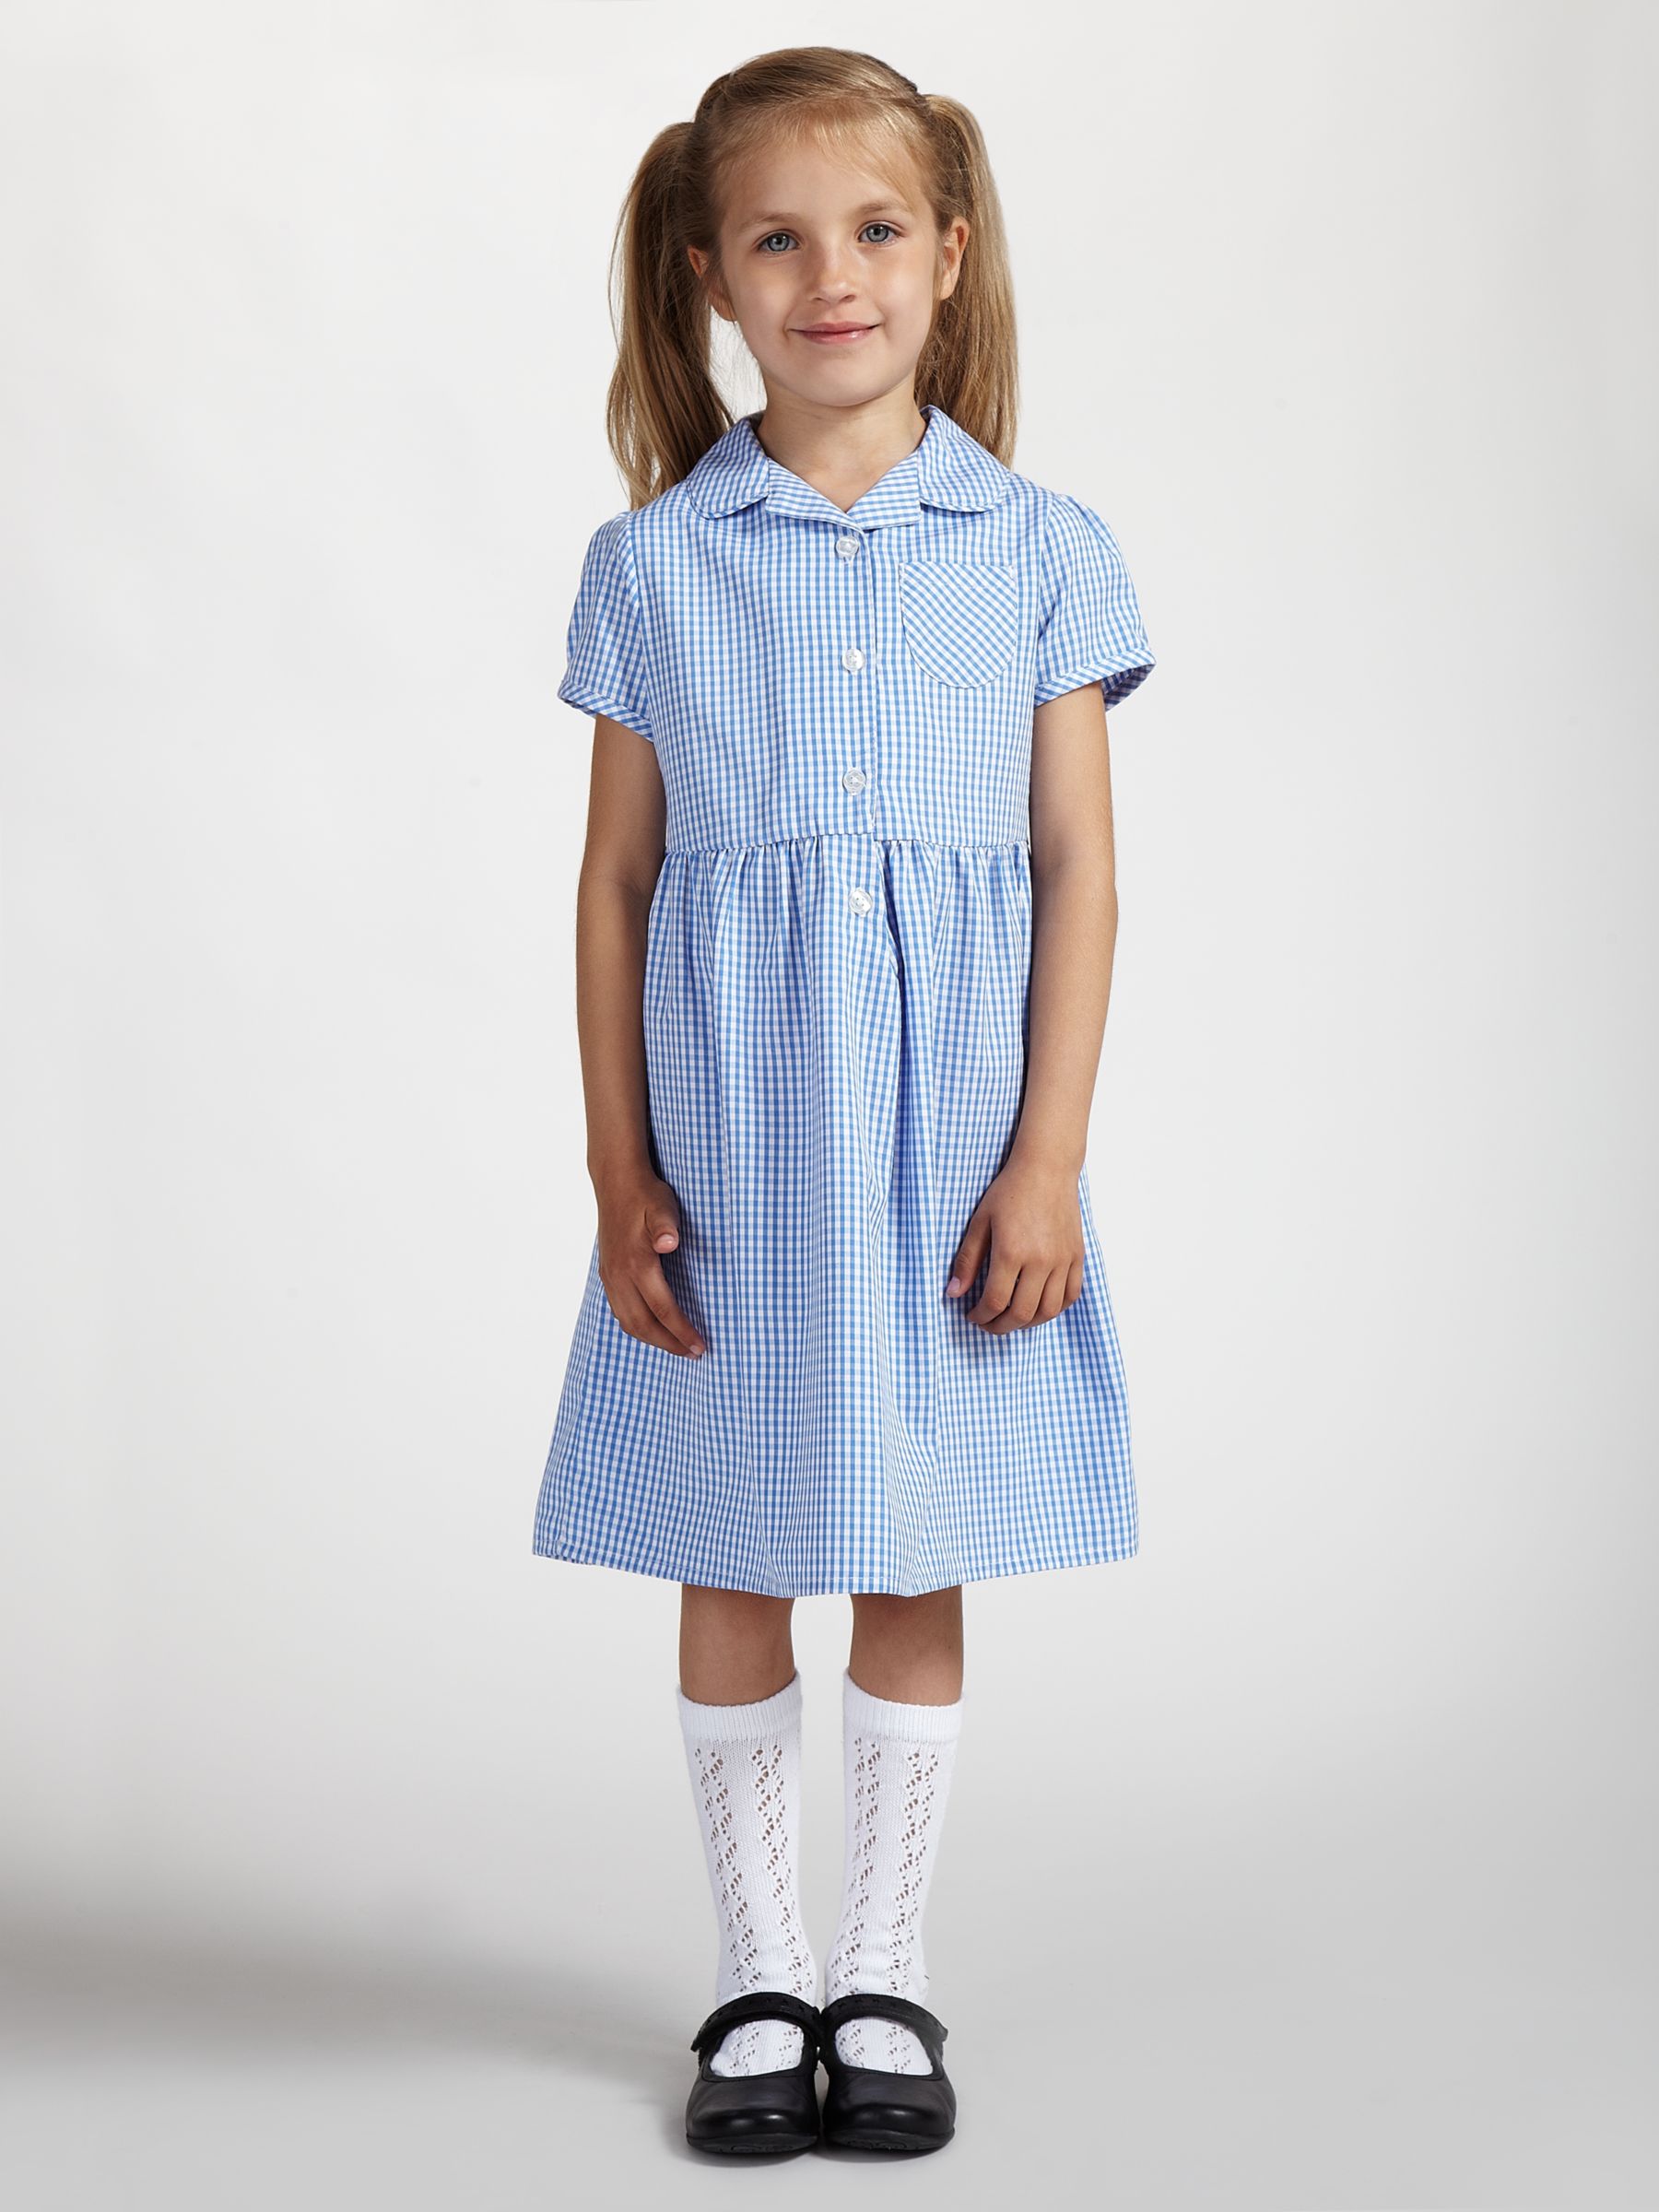 cotton gingham school dress